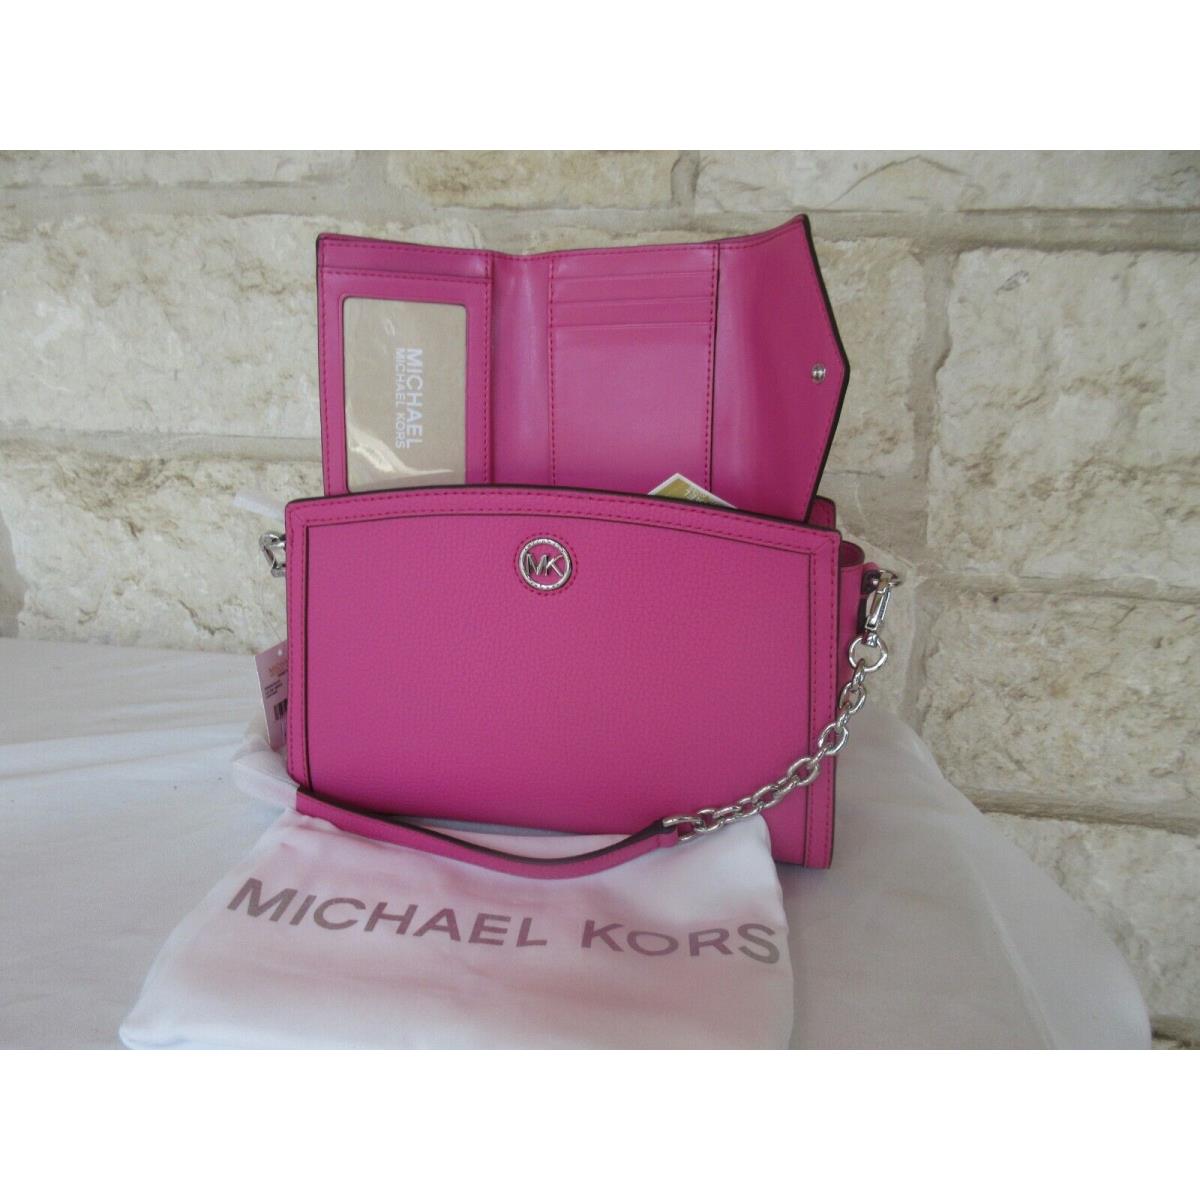 Michael Kors  bag  Chantal - Cerise/Pink Bright Colorful Handle/Strap, Silver Hardware, Cerise (Pink) Silver hardware Exterior 17